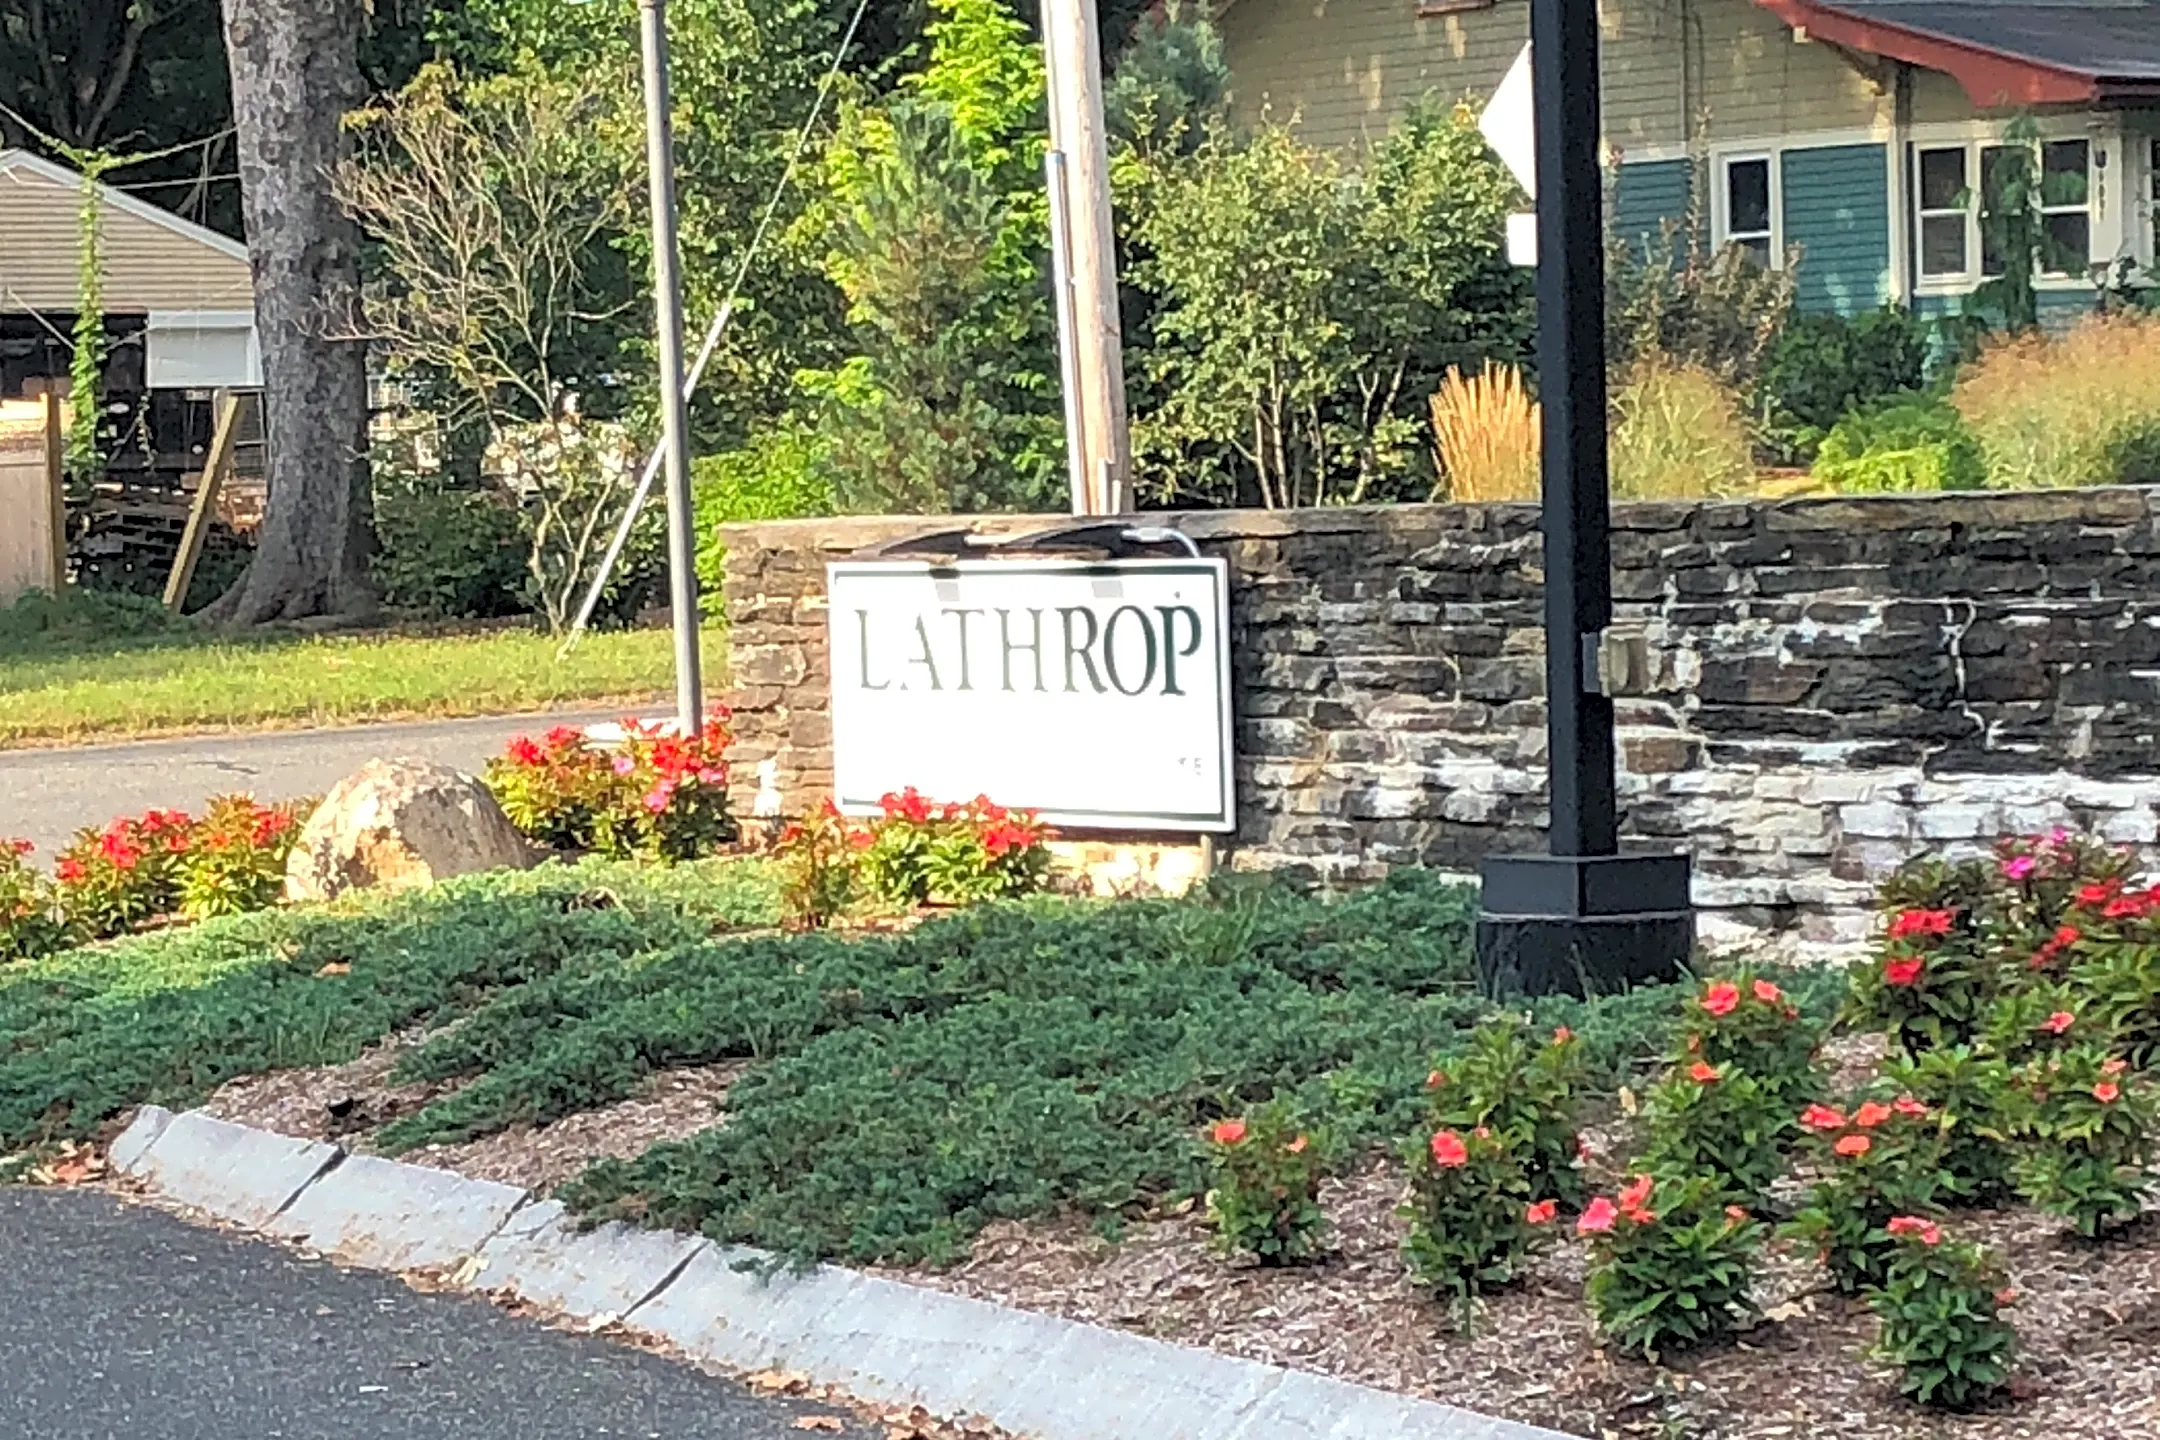 Pool - Lathrop communities - Northampton, MA